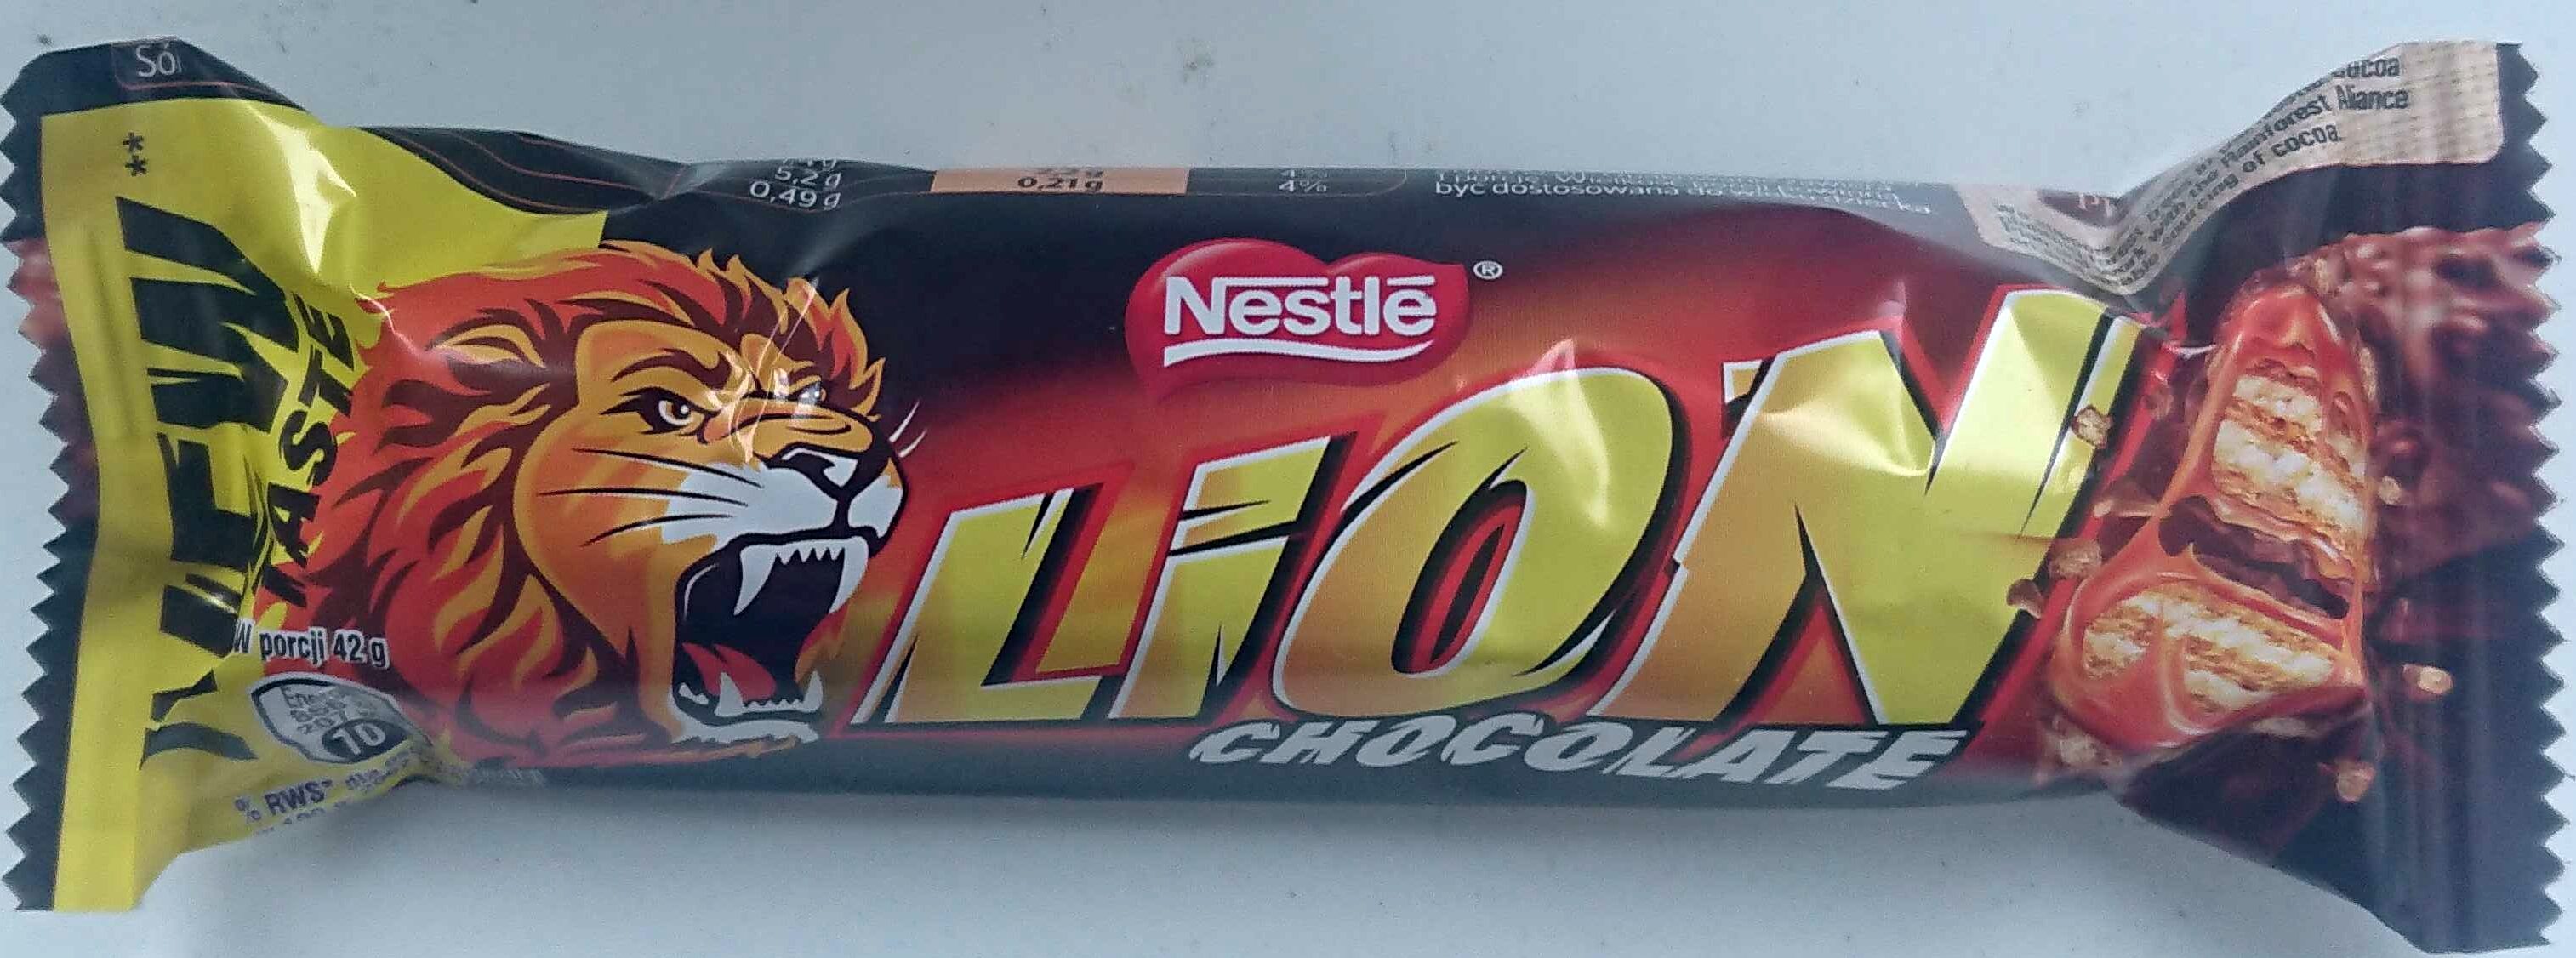 Lion chocolate - Product - pl